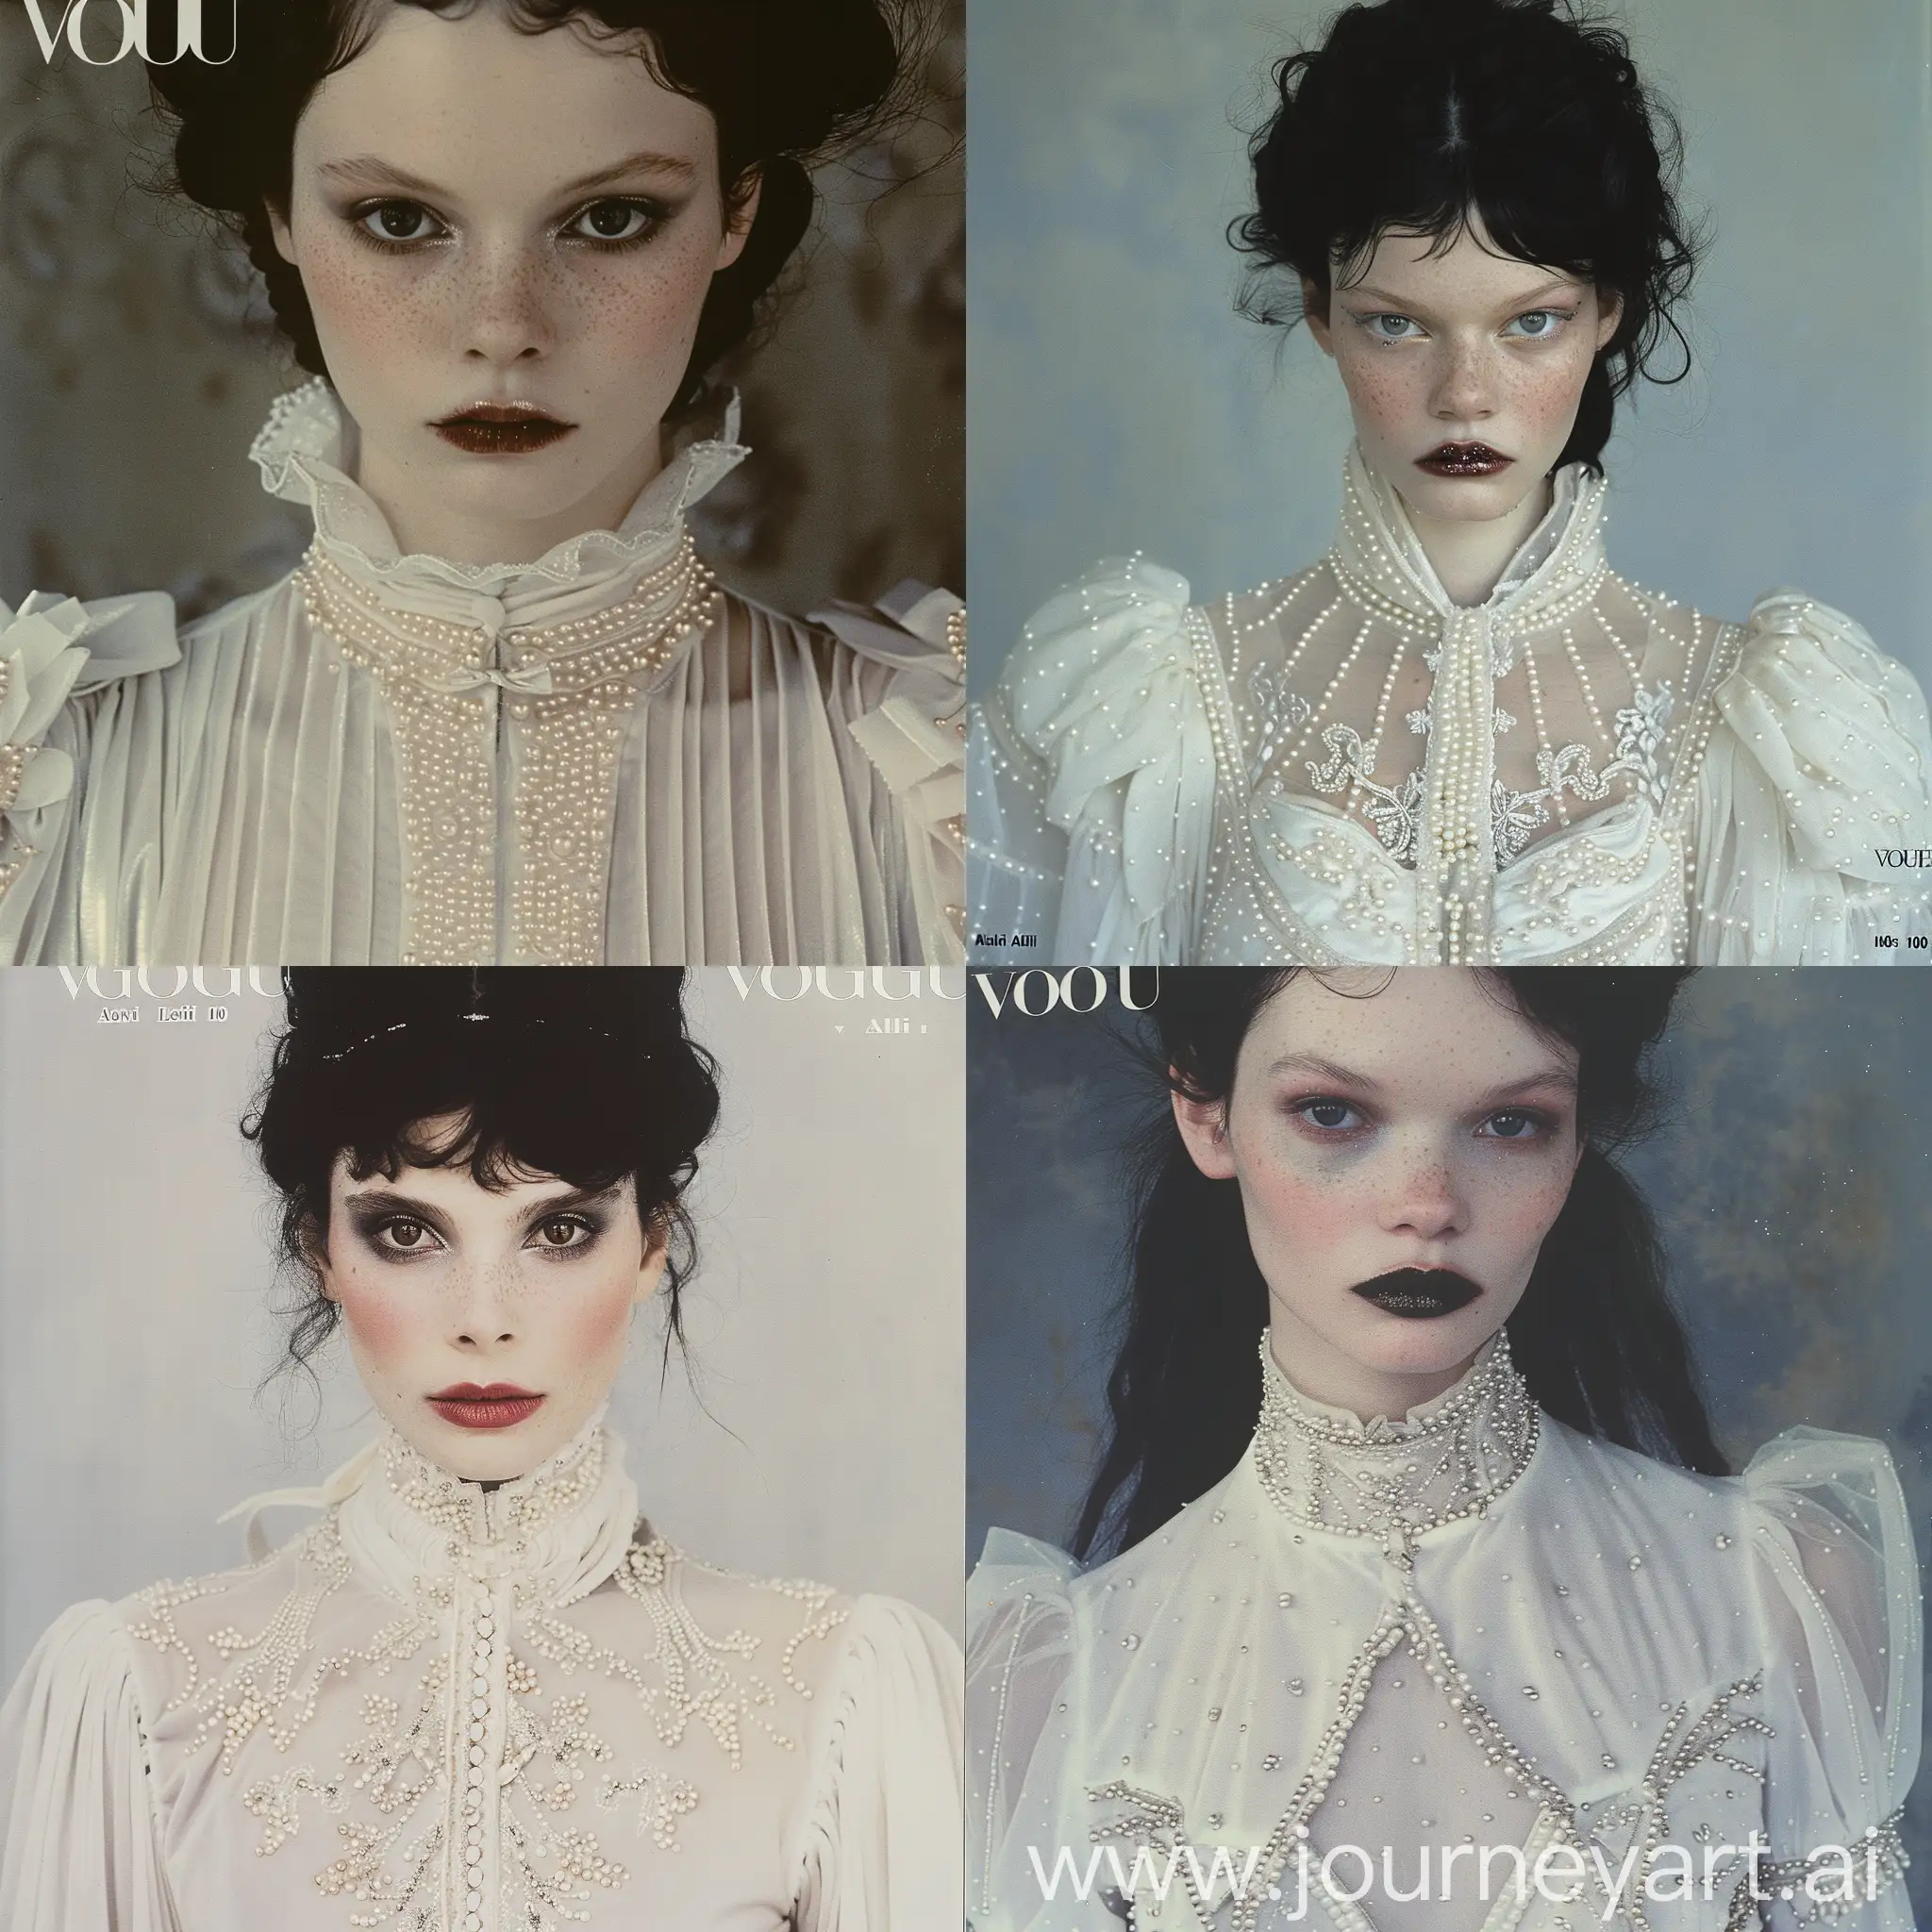 Portuguese-Model-in-John-Galliano-Wedding-Dress-90s-Vogue-Shoot